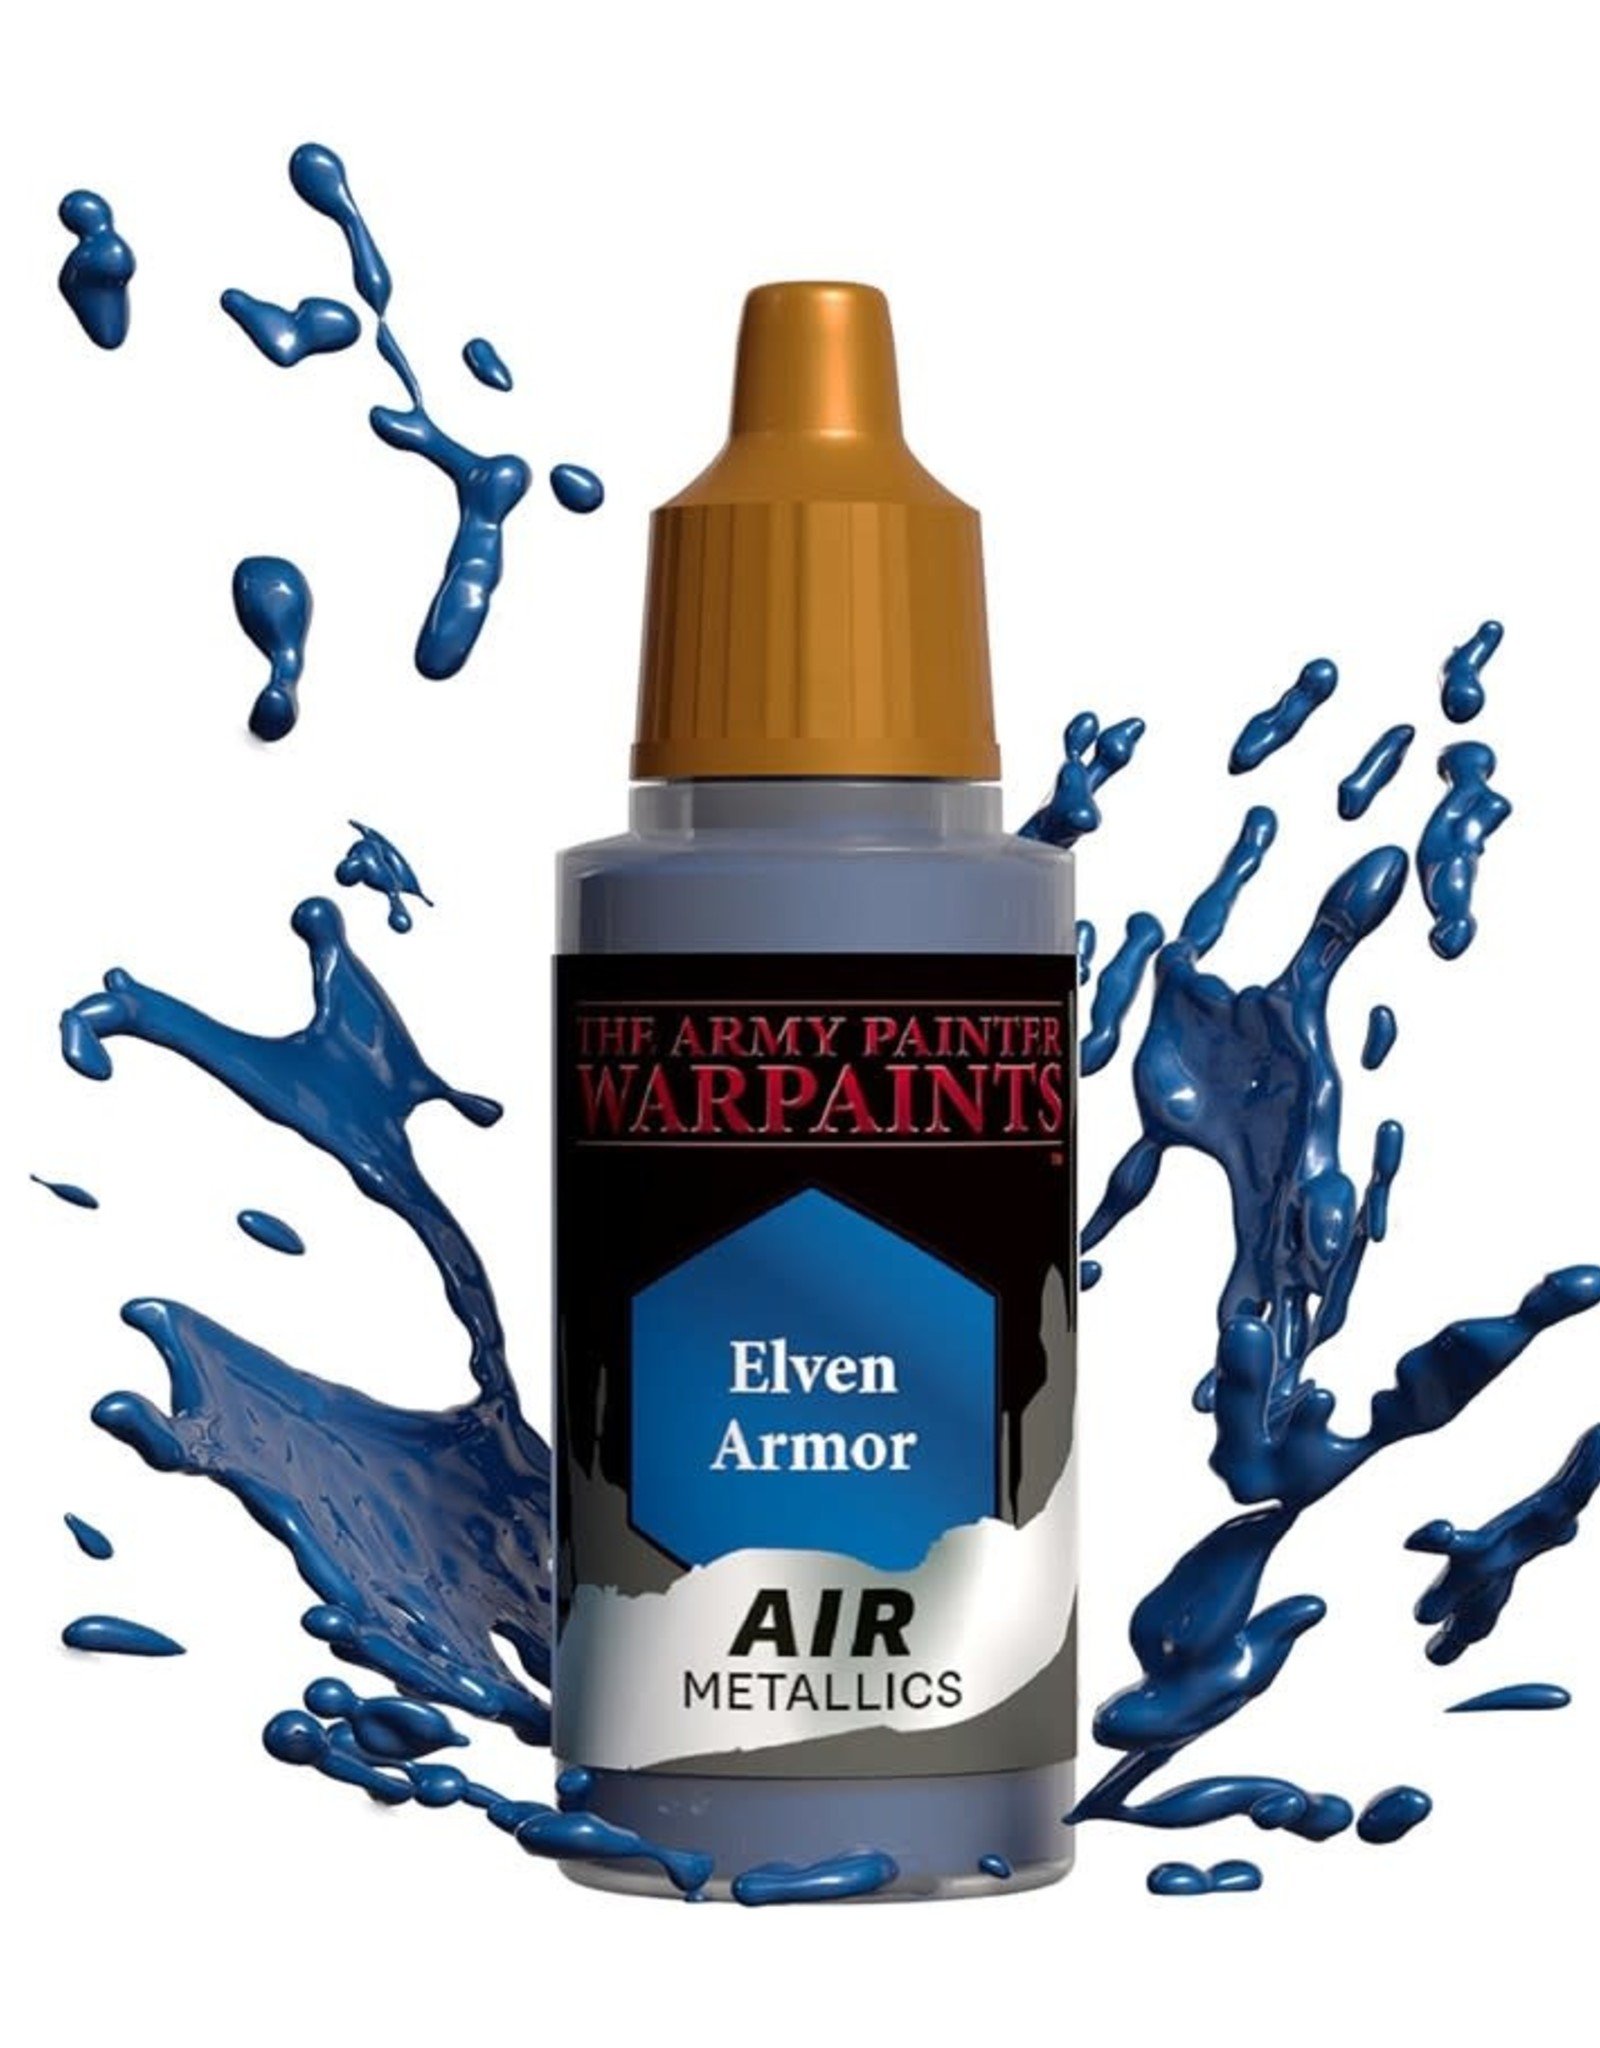 The Army Painter TAP Warpaints Air Metallics: Elven Armor